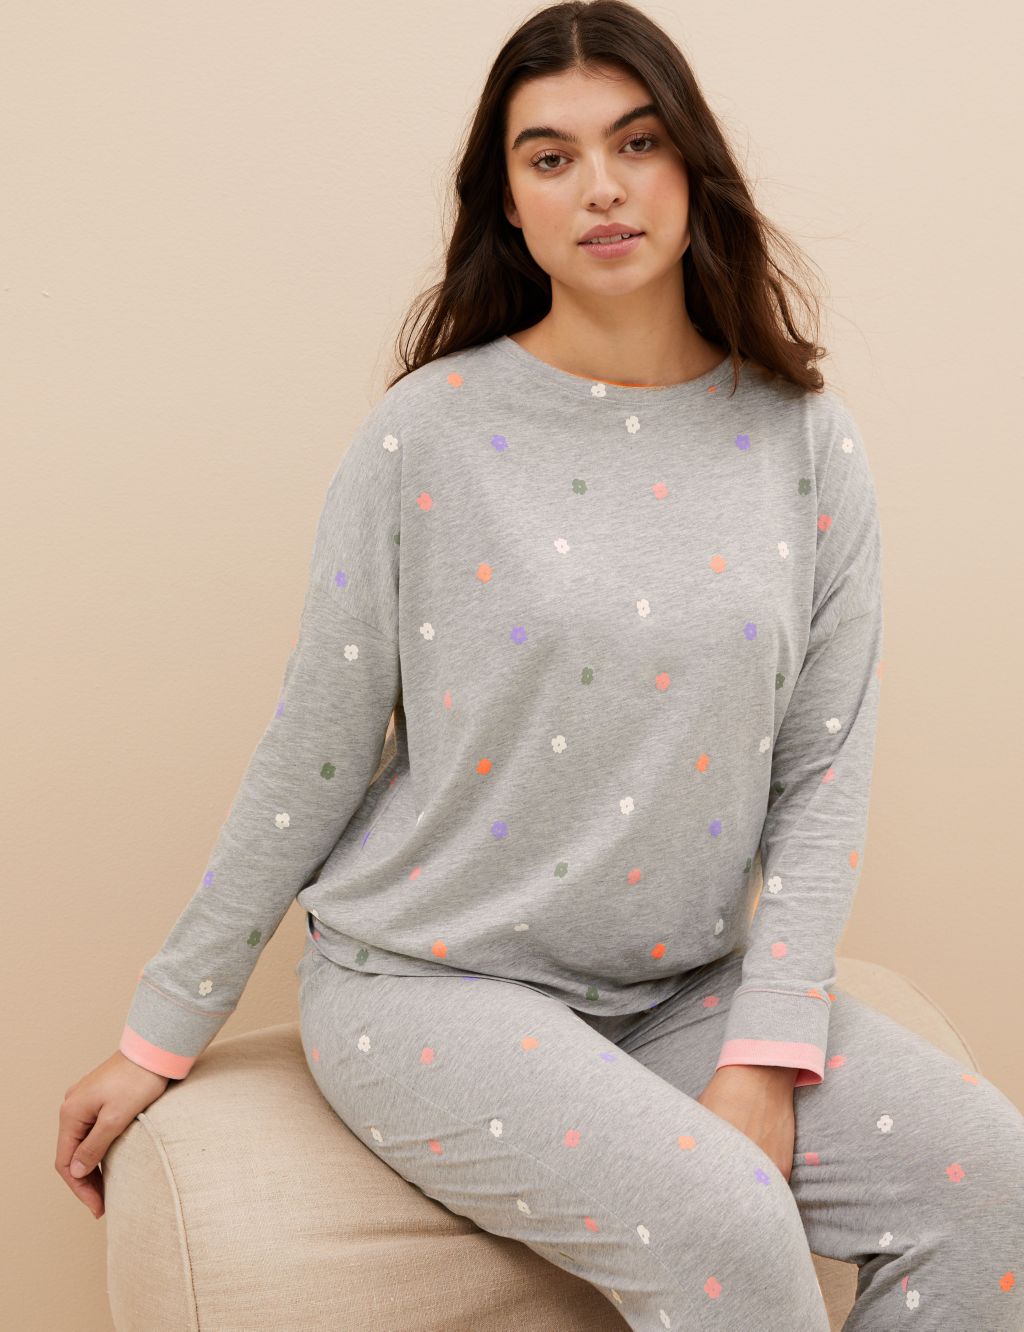 Grey Floral Lace Inset Solid Top Cotton Blend Knit Pajama Set, Pajamas